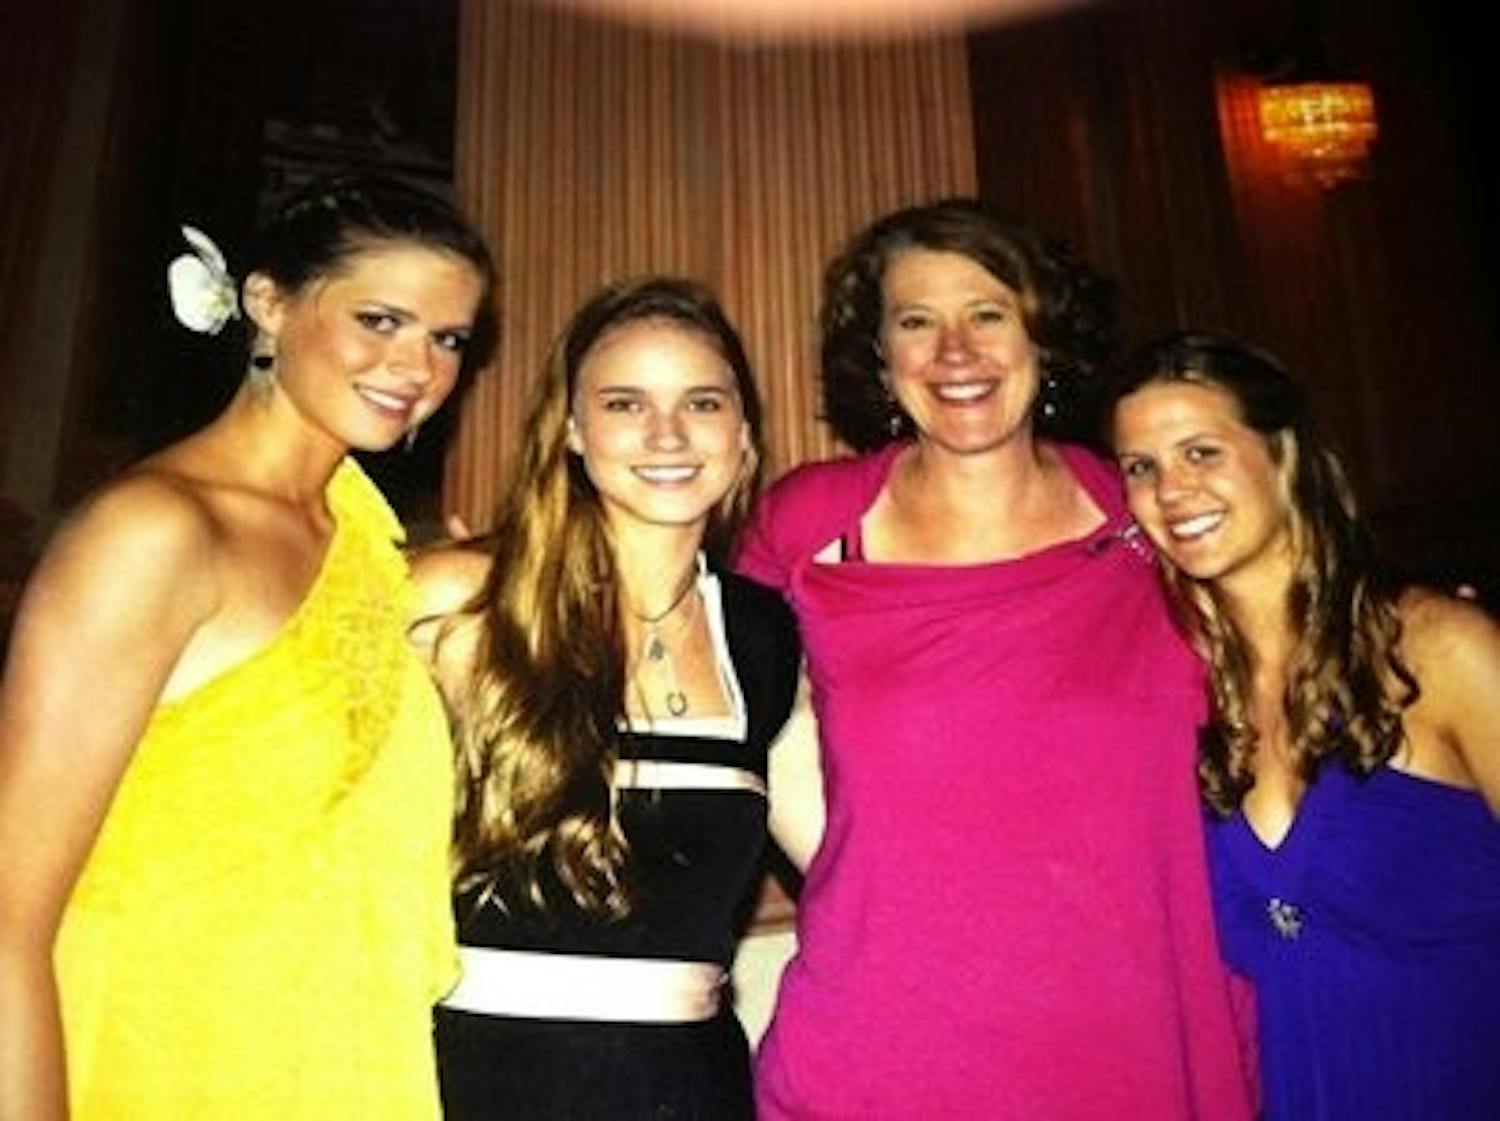 (From left) Cassandra Gacek, Laura Kennedy, Julie Albrecht and Madeline Irby. (Courtesy of Julie Albrecht)